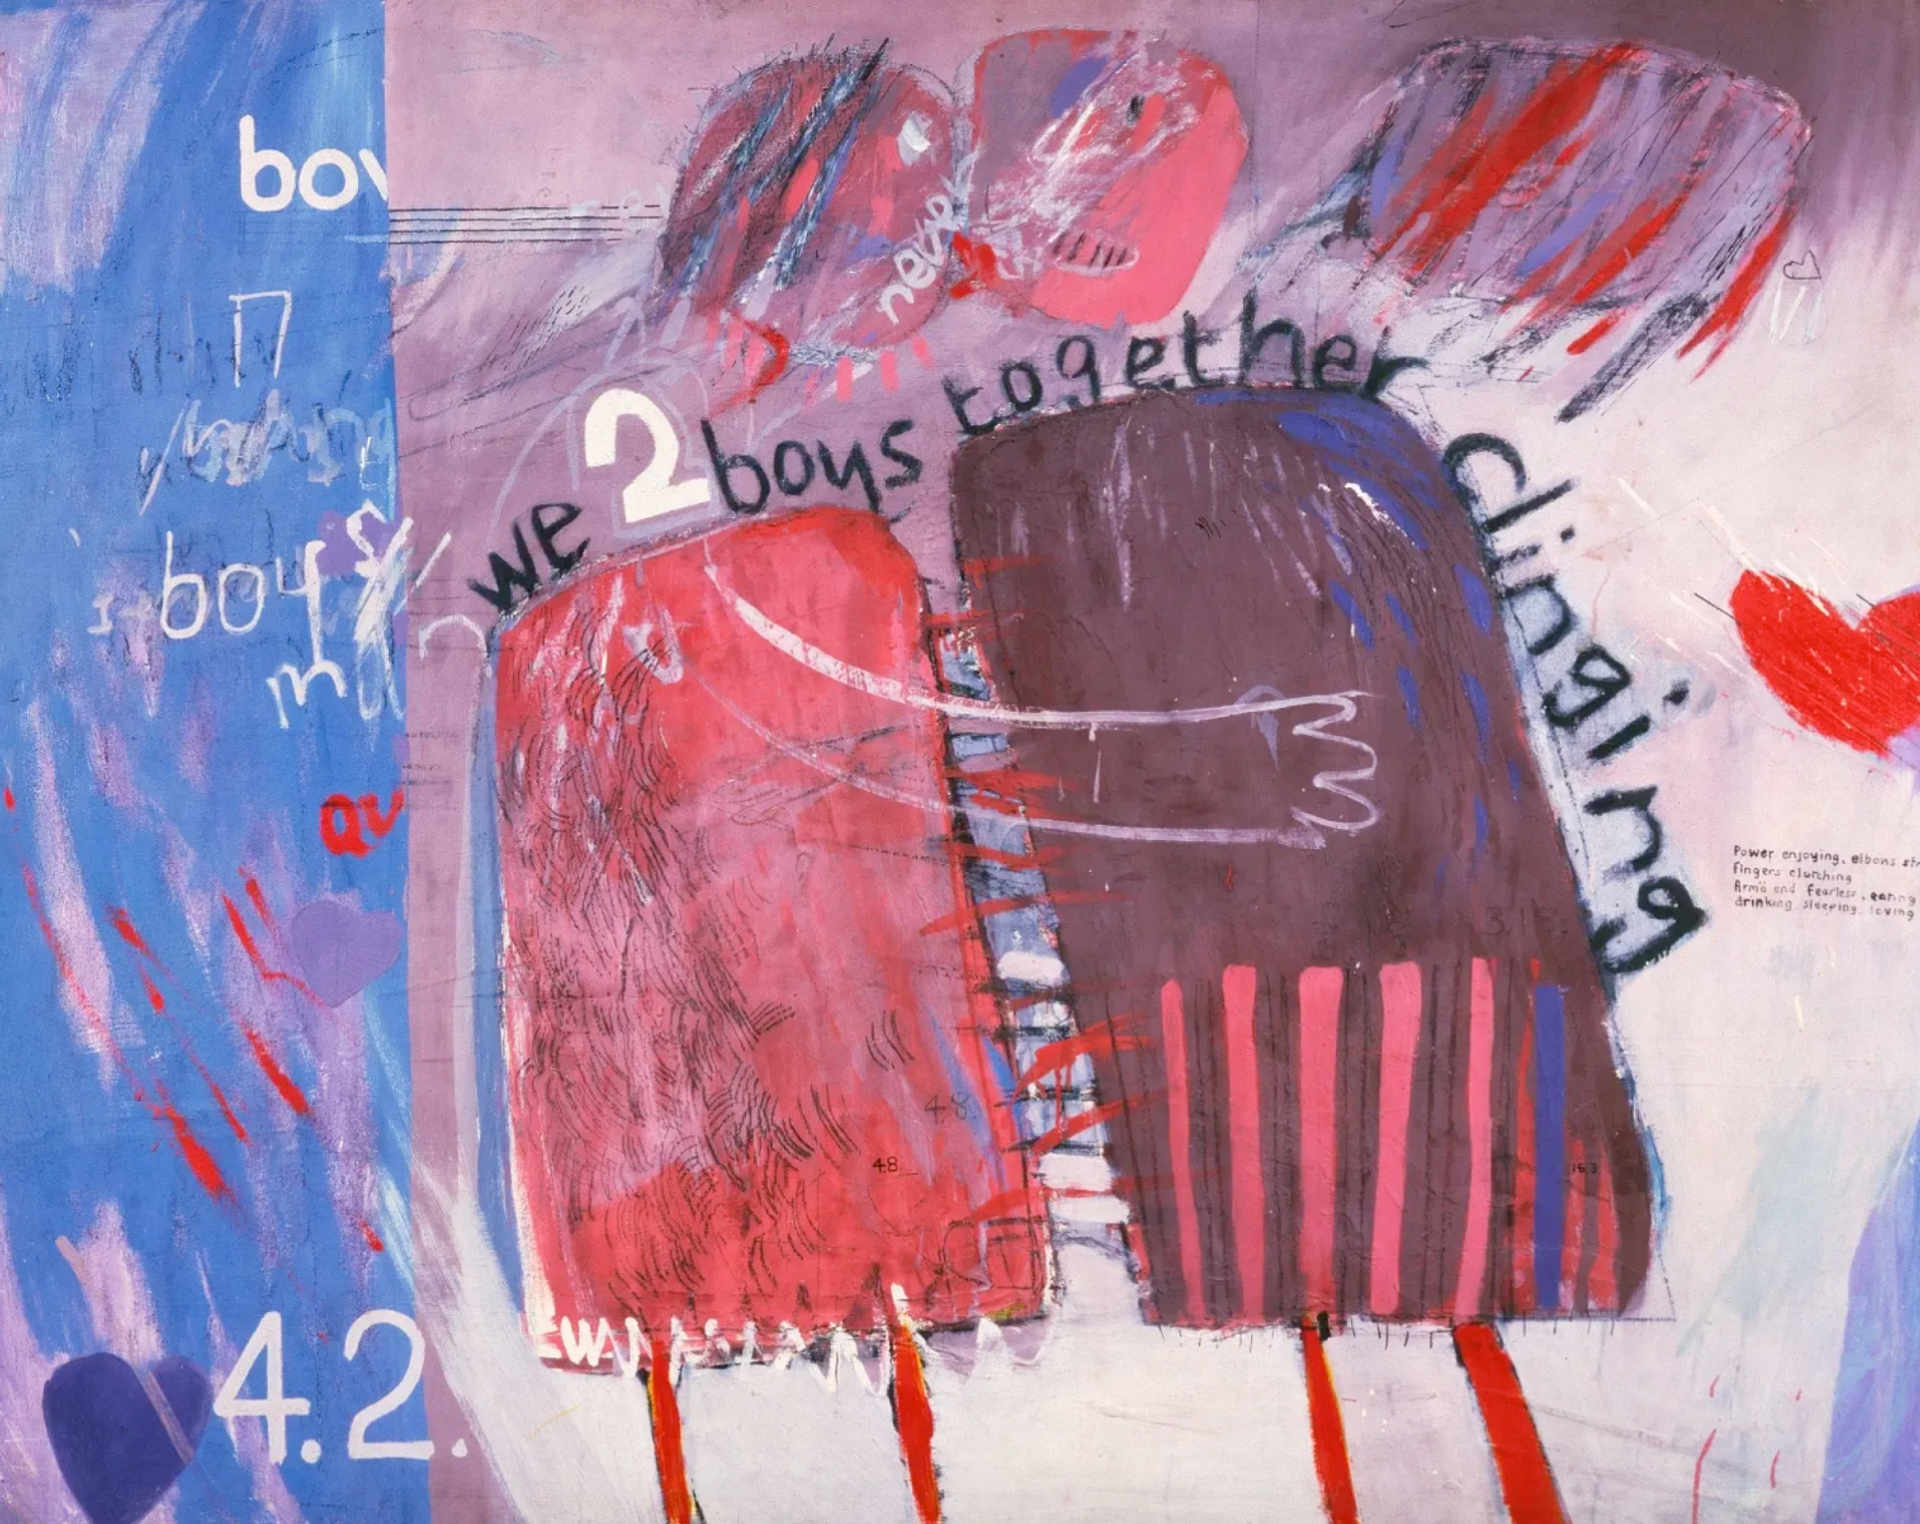 We Two Boys Together Clinging by David Hockney